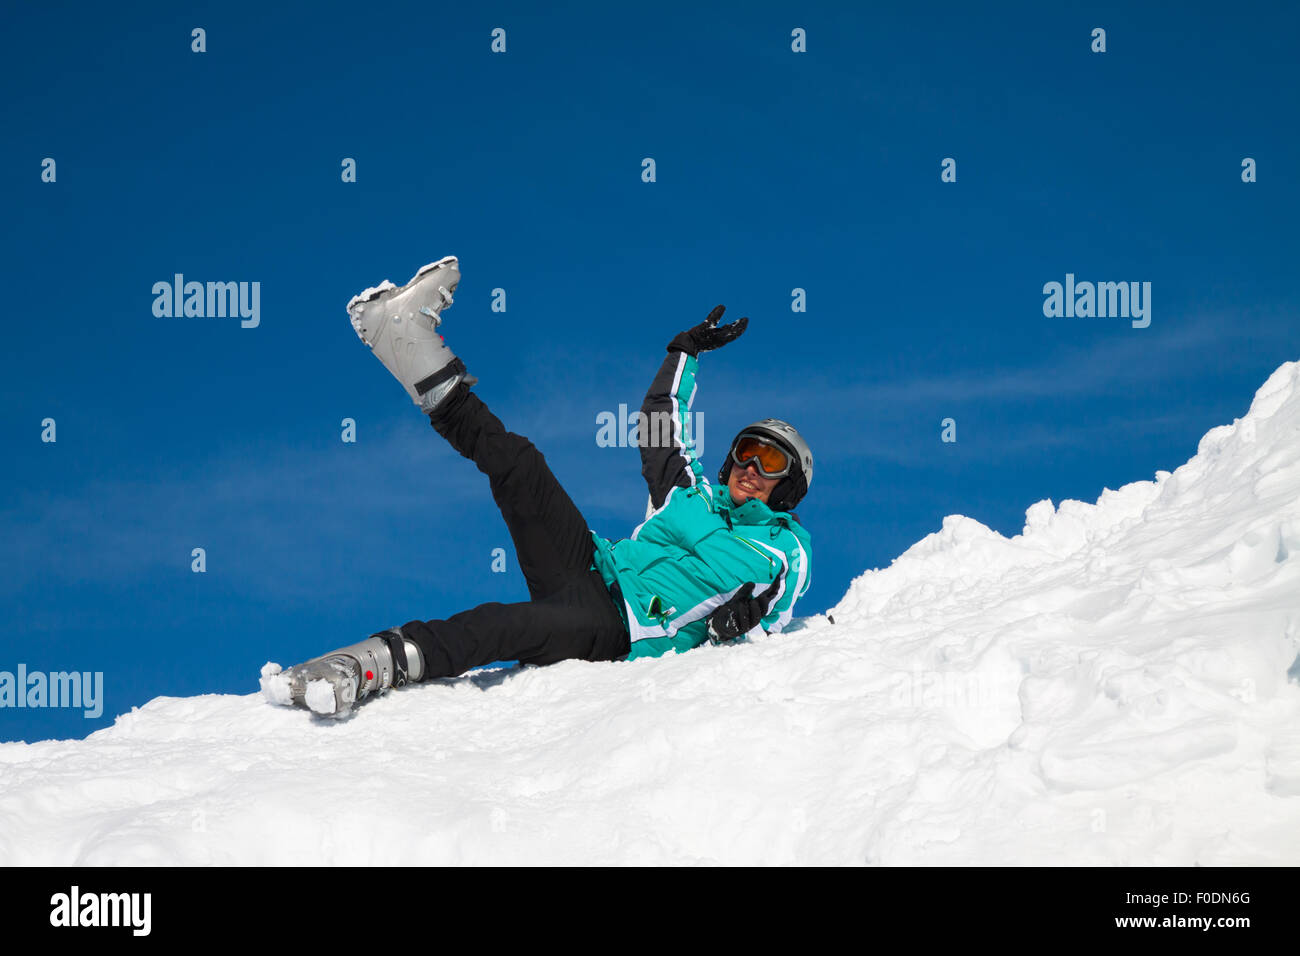 skier on snow hill, Solden, Austria, extreme winter sport Stock Photo